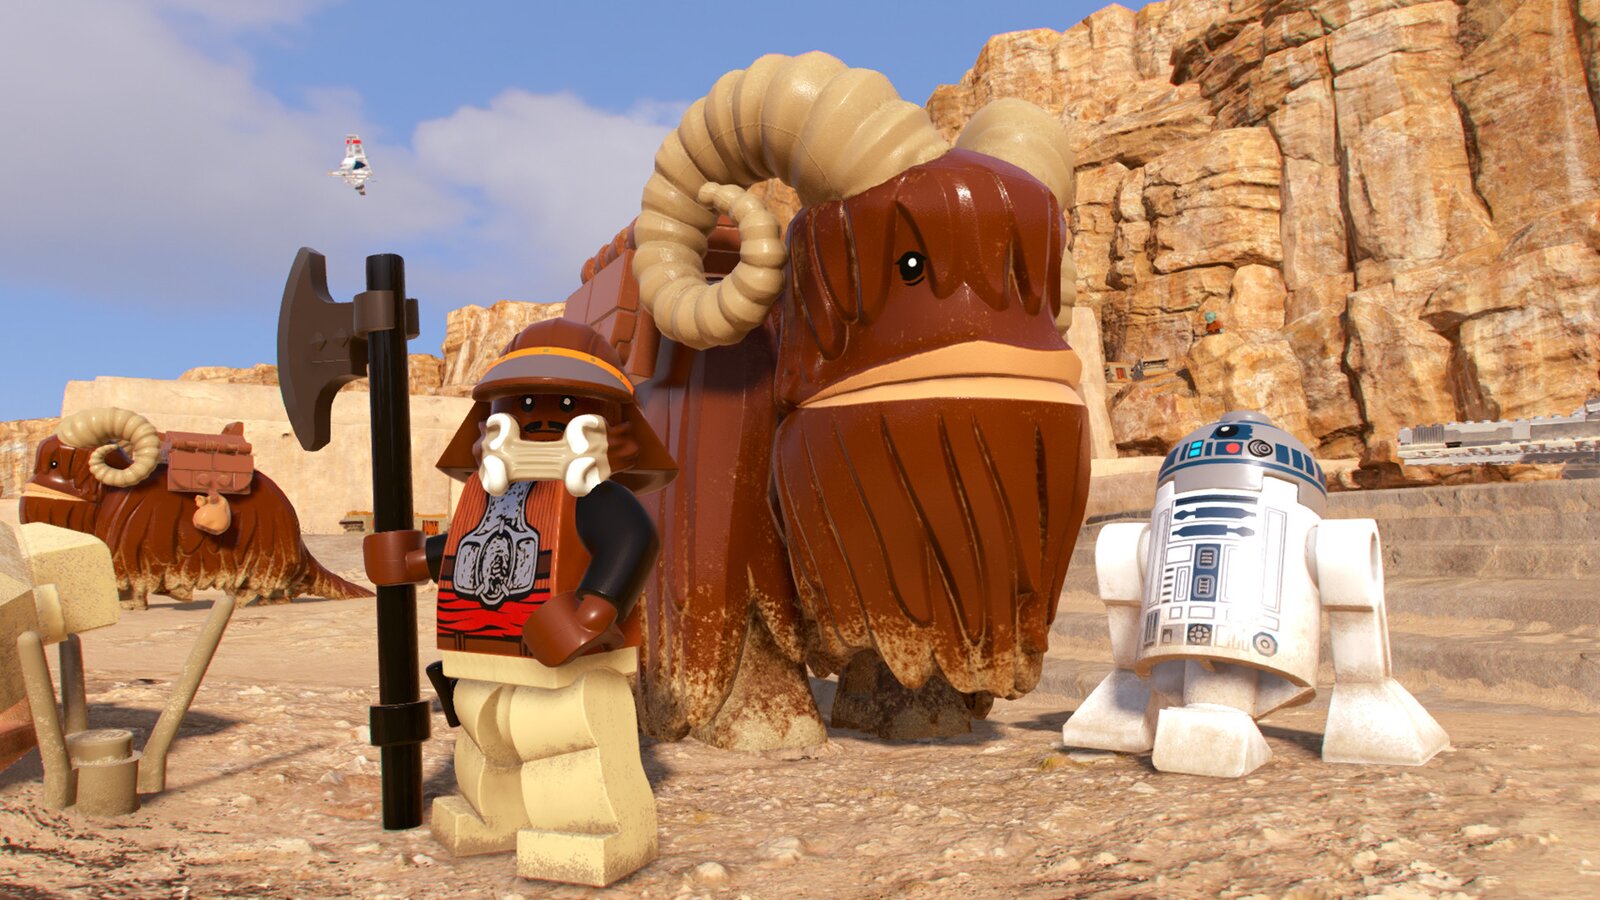 LEGO Star Wars: The Skywalker Saga - Galactic Edition